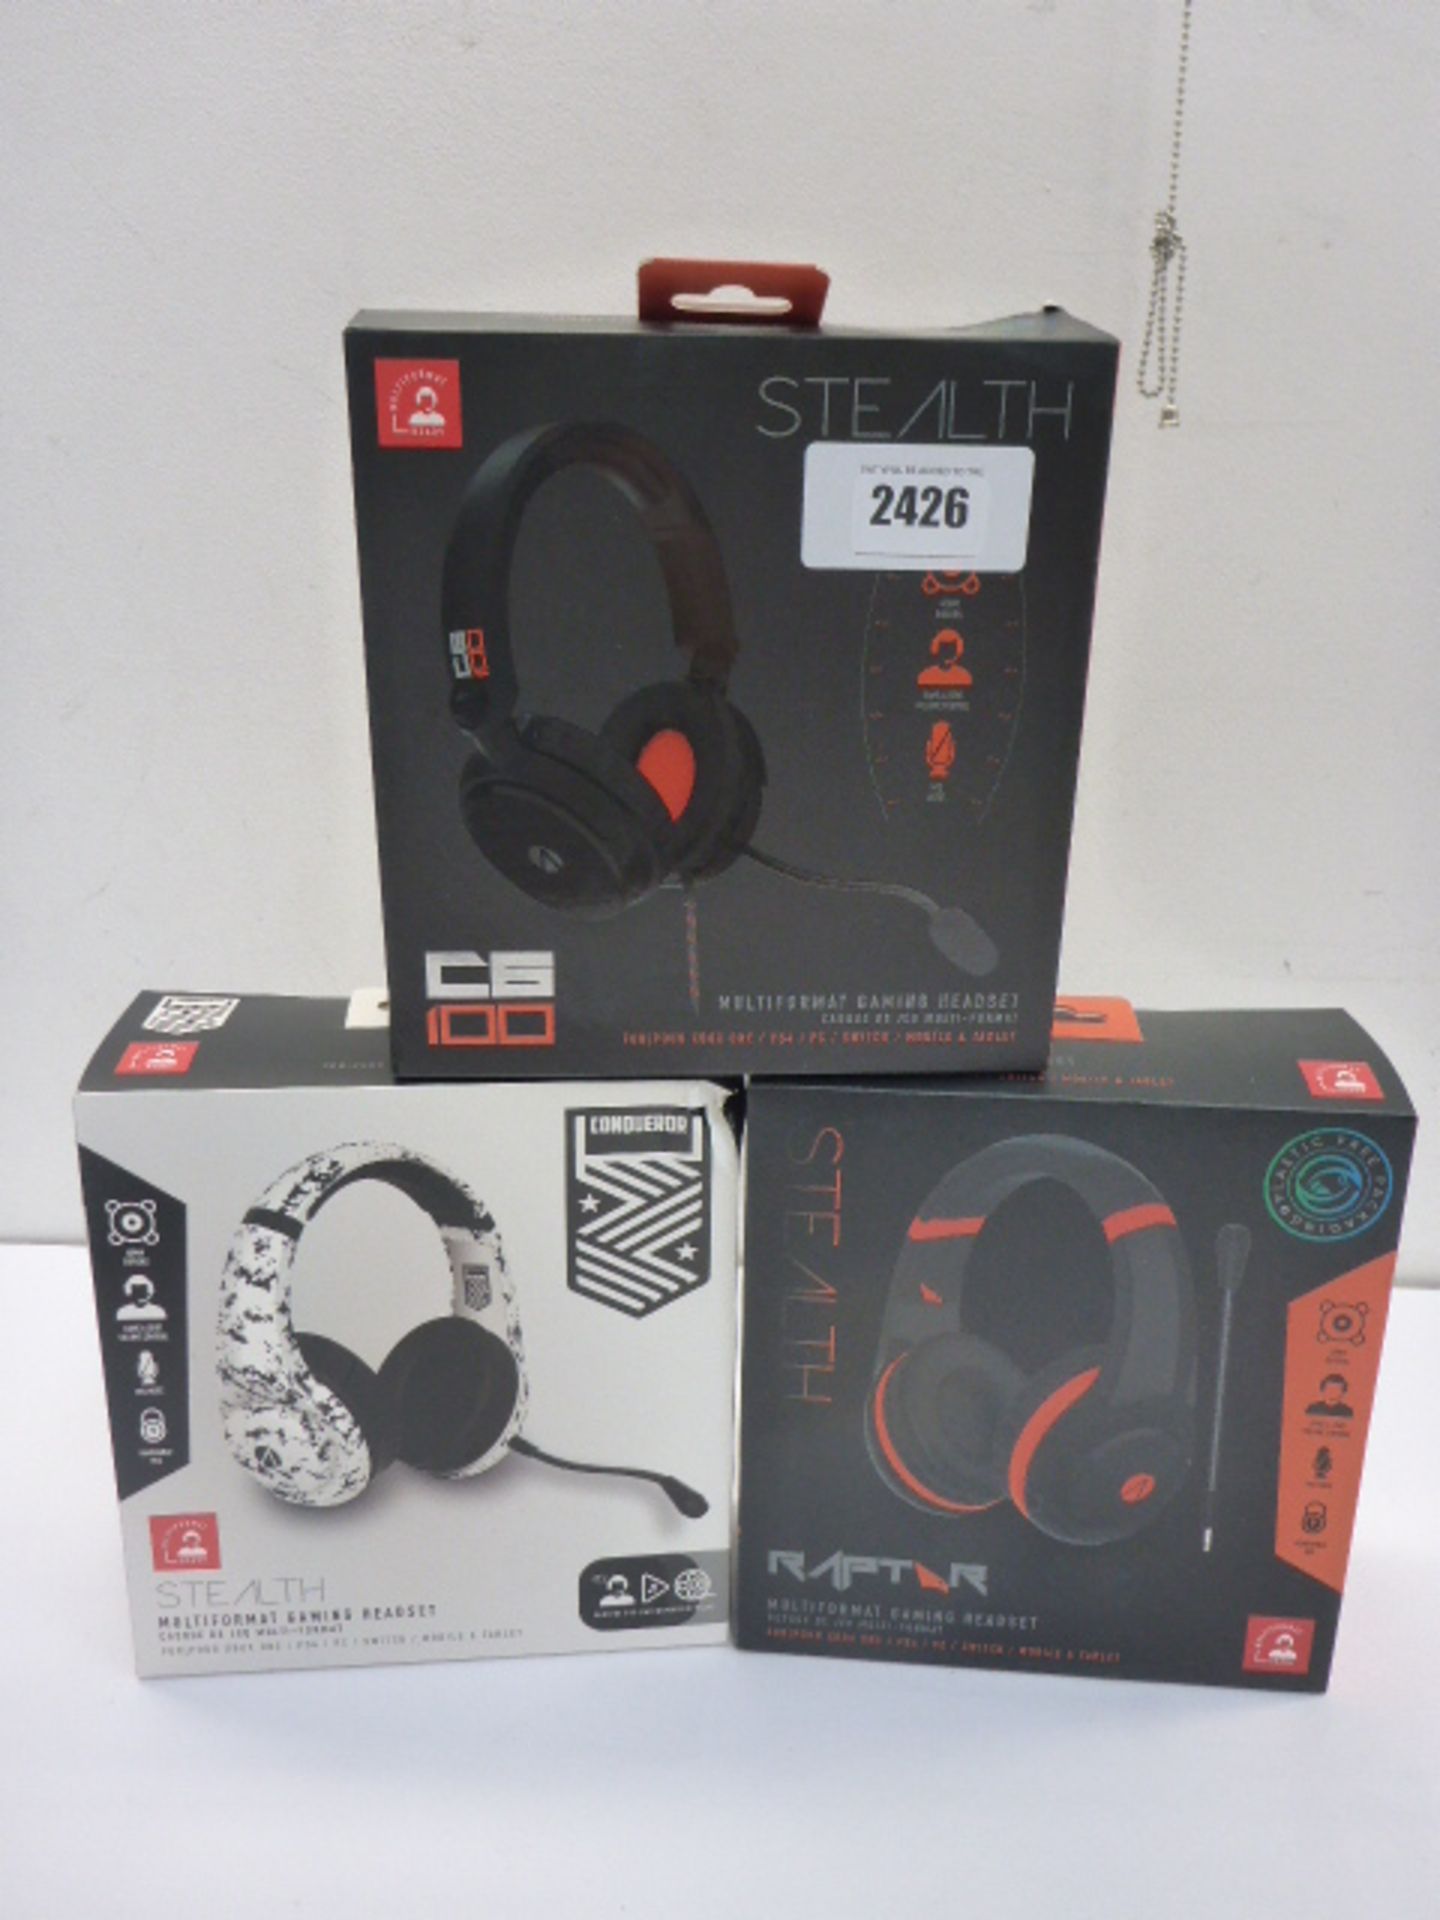 3 Stealth headsets; Raptor C6 100, Raptor and Conquerer